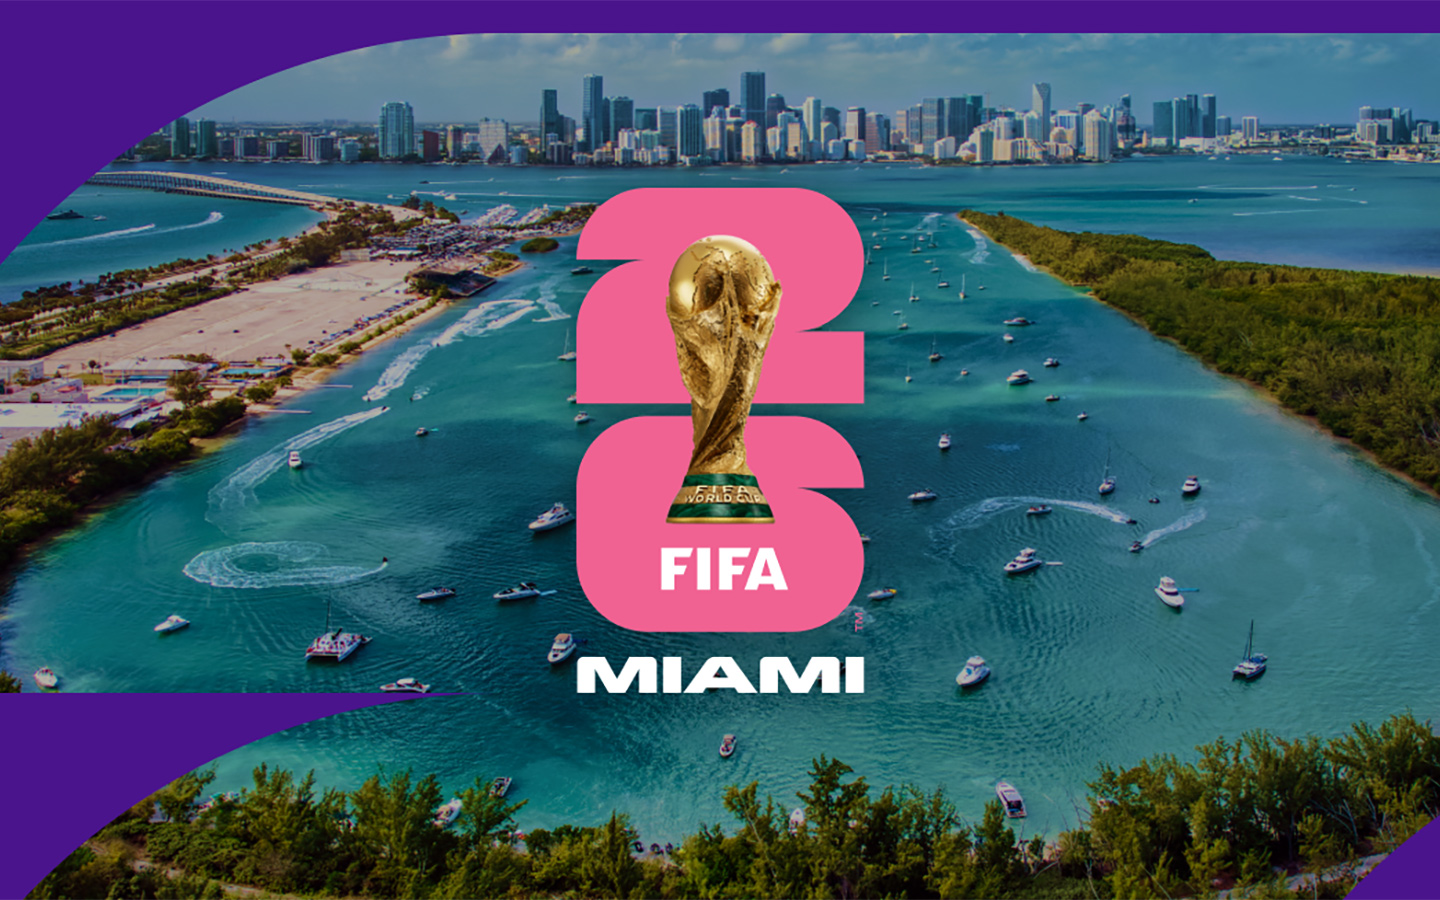 FIFA World Cup 26™